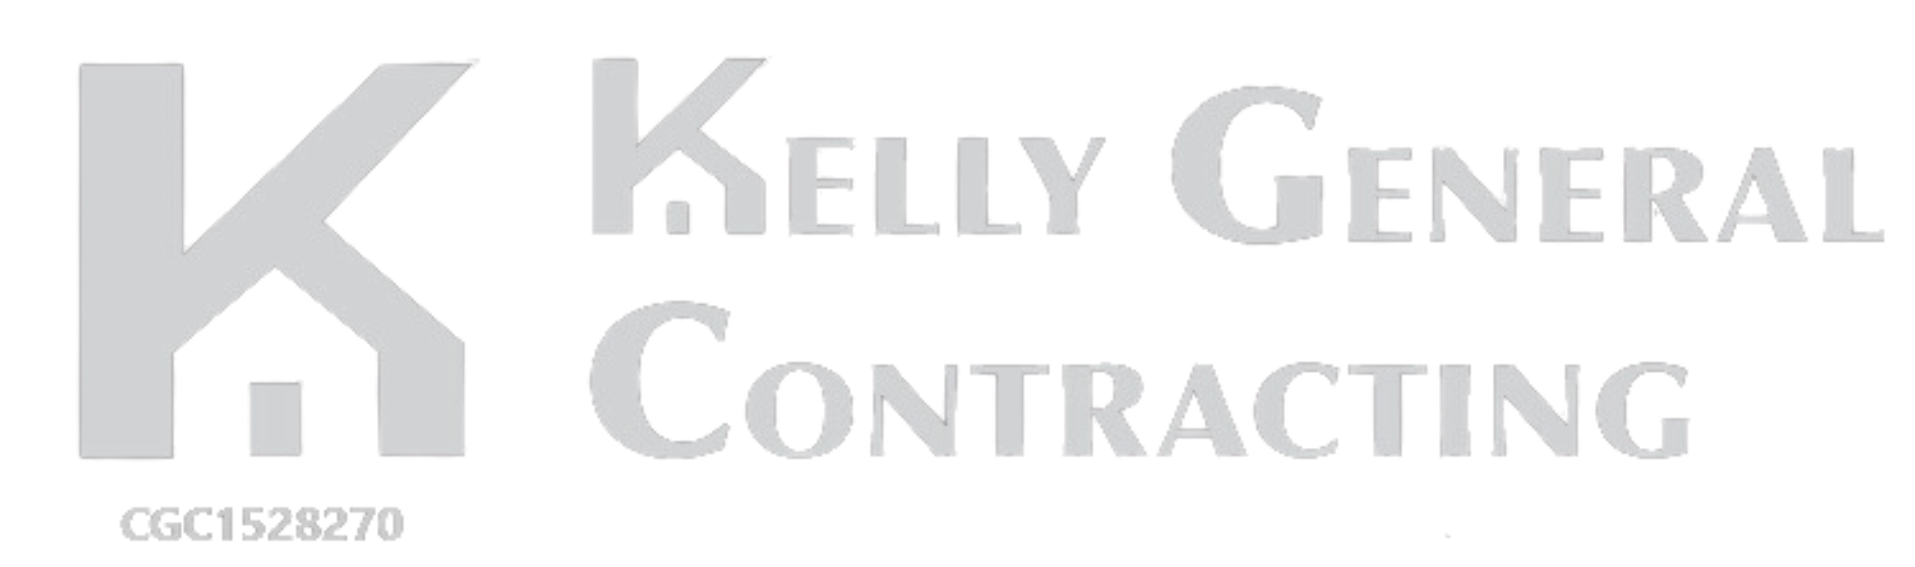 Kelly General Contracting LLC logo